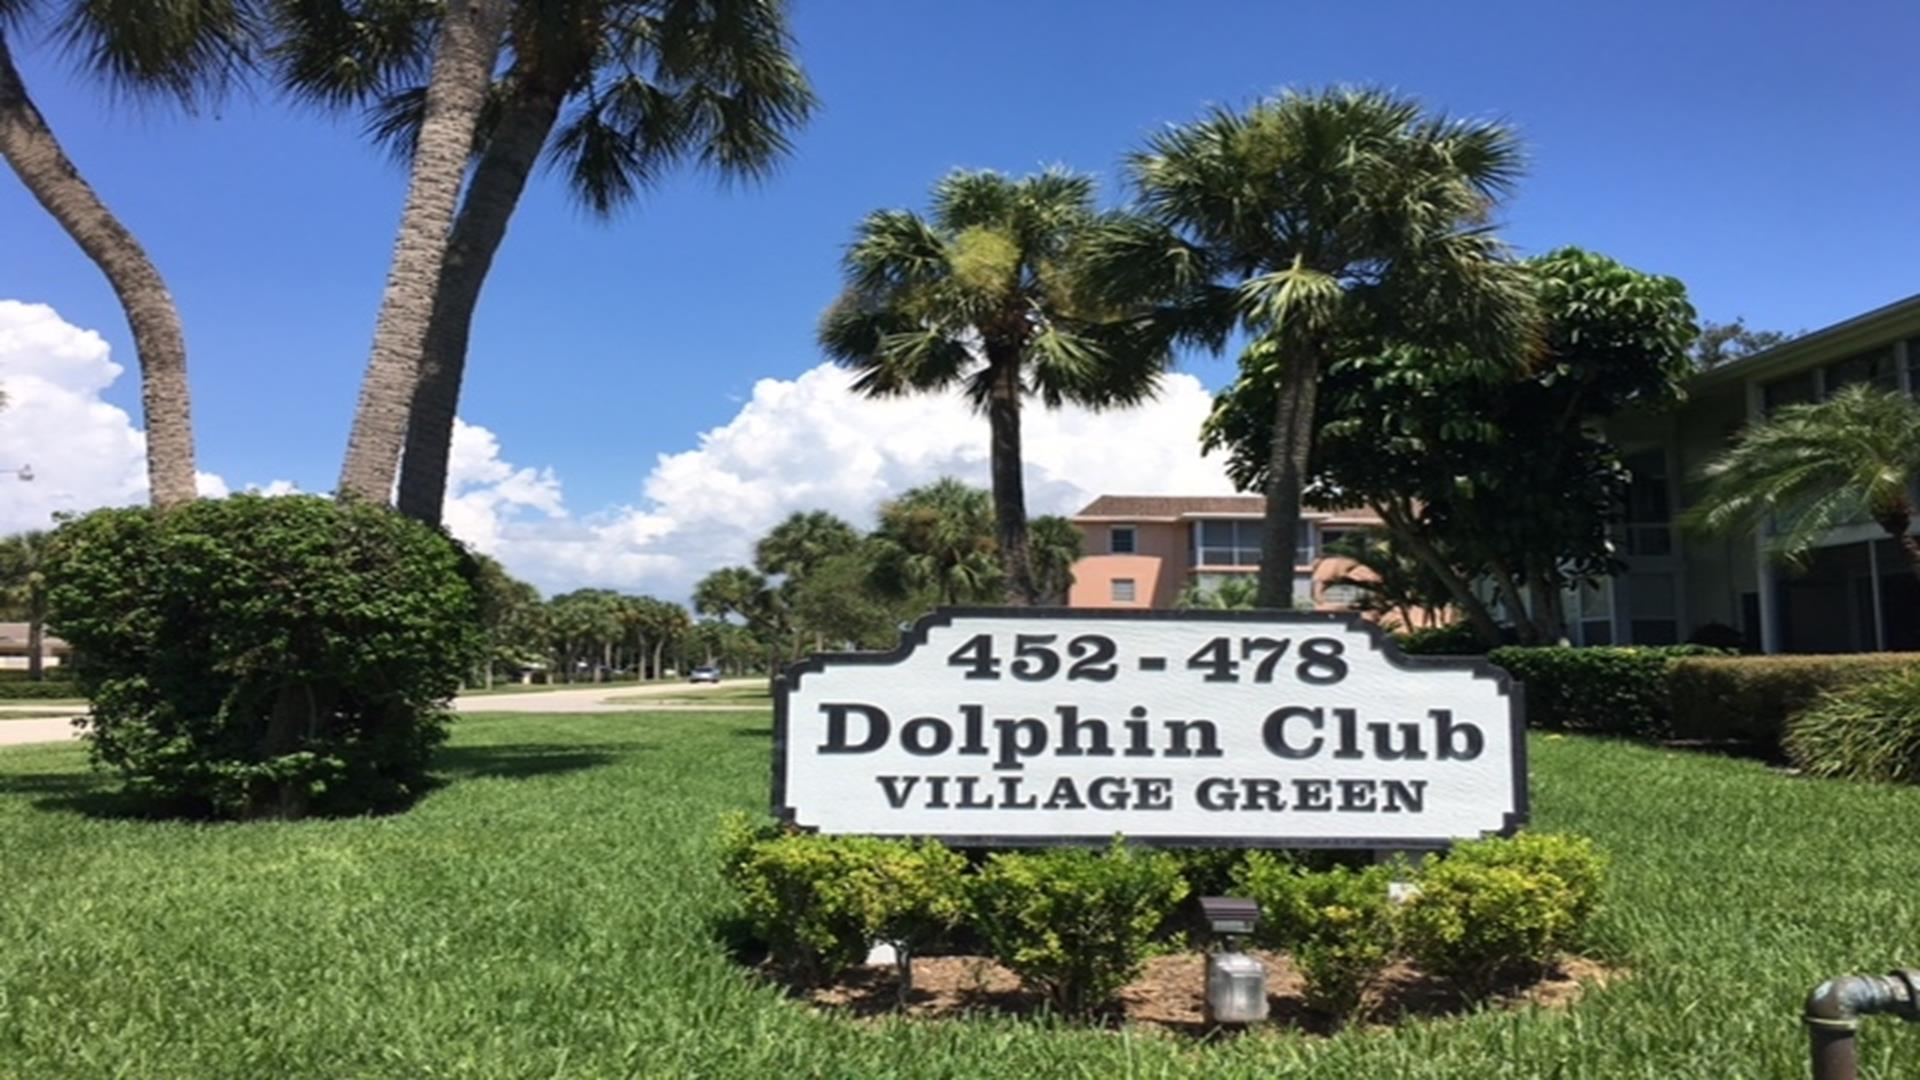 Dolphin club